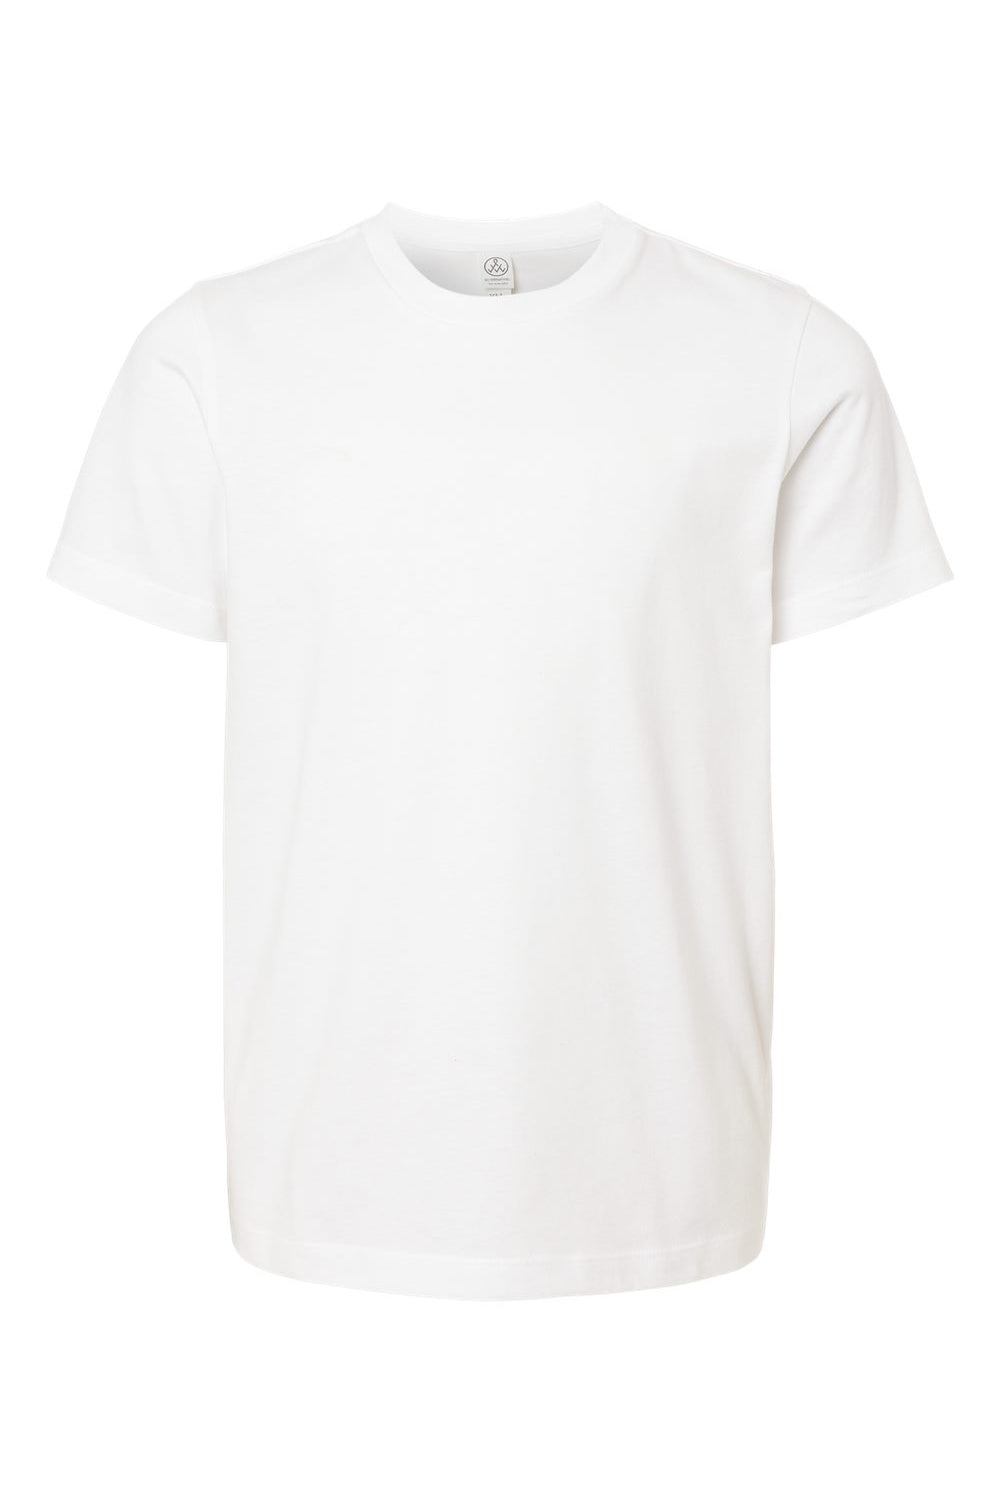 Alternative K1070 Youth Go To Short Sleeve Crewneck T-Shirt White Flat Front